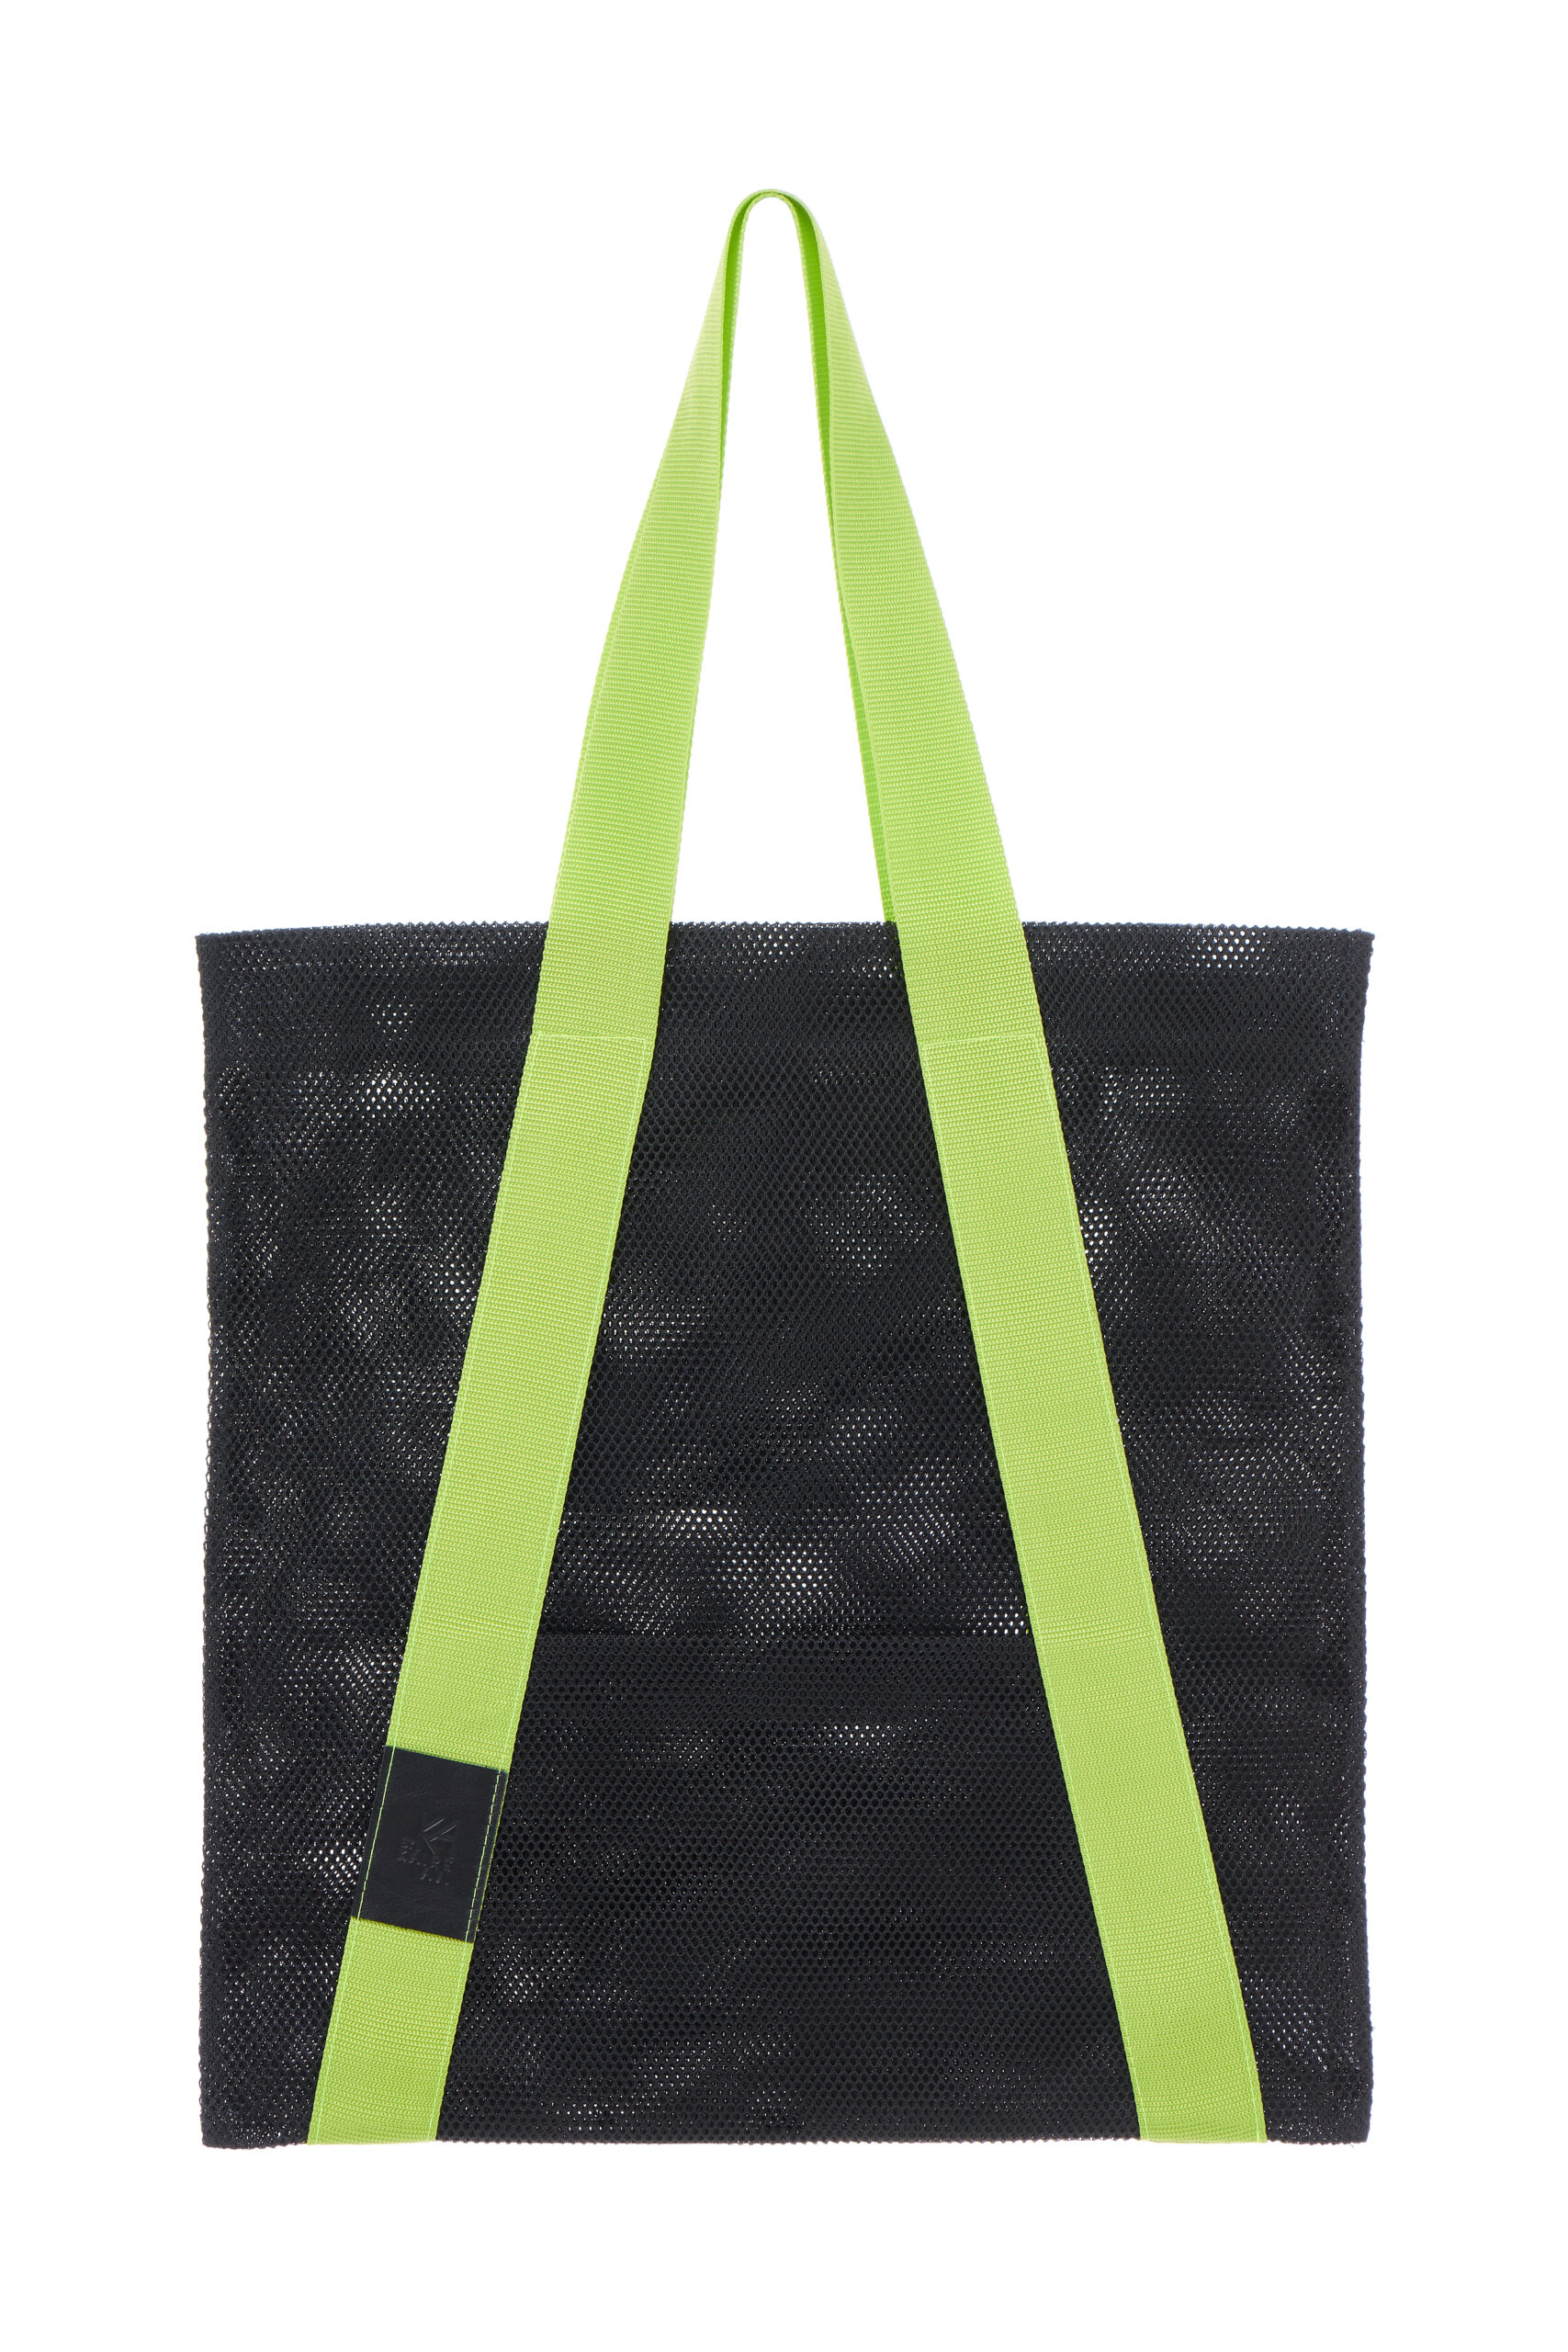 Poekott “Hanna” neoonroheline rihm / Tote bag “Hanna” black, yellow straps